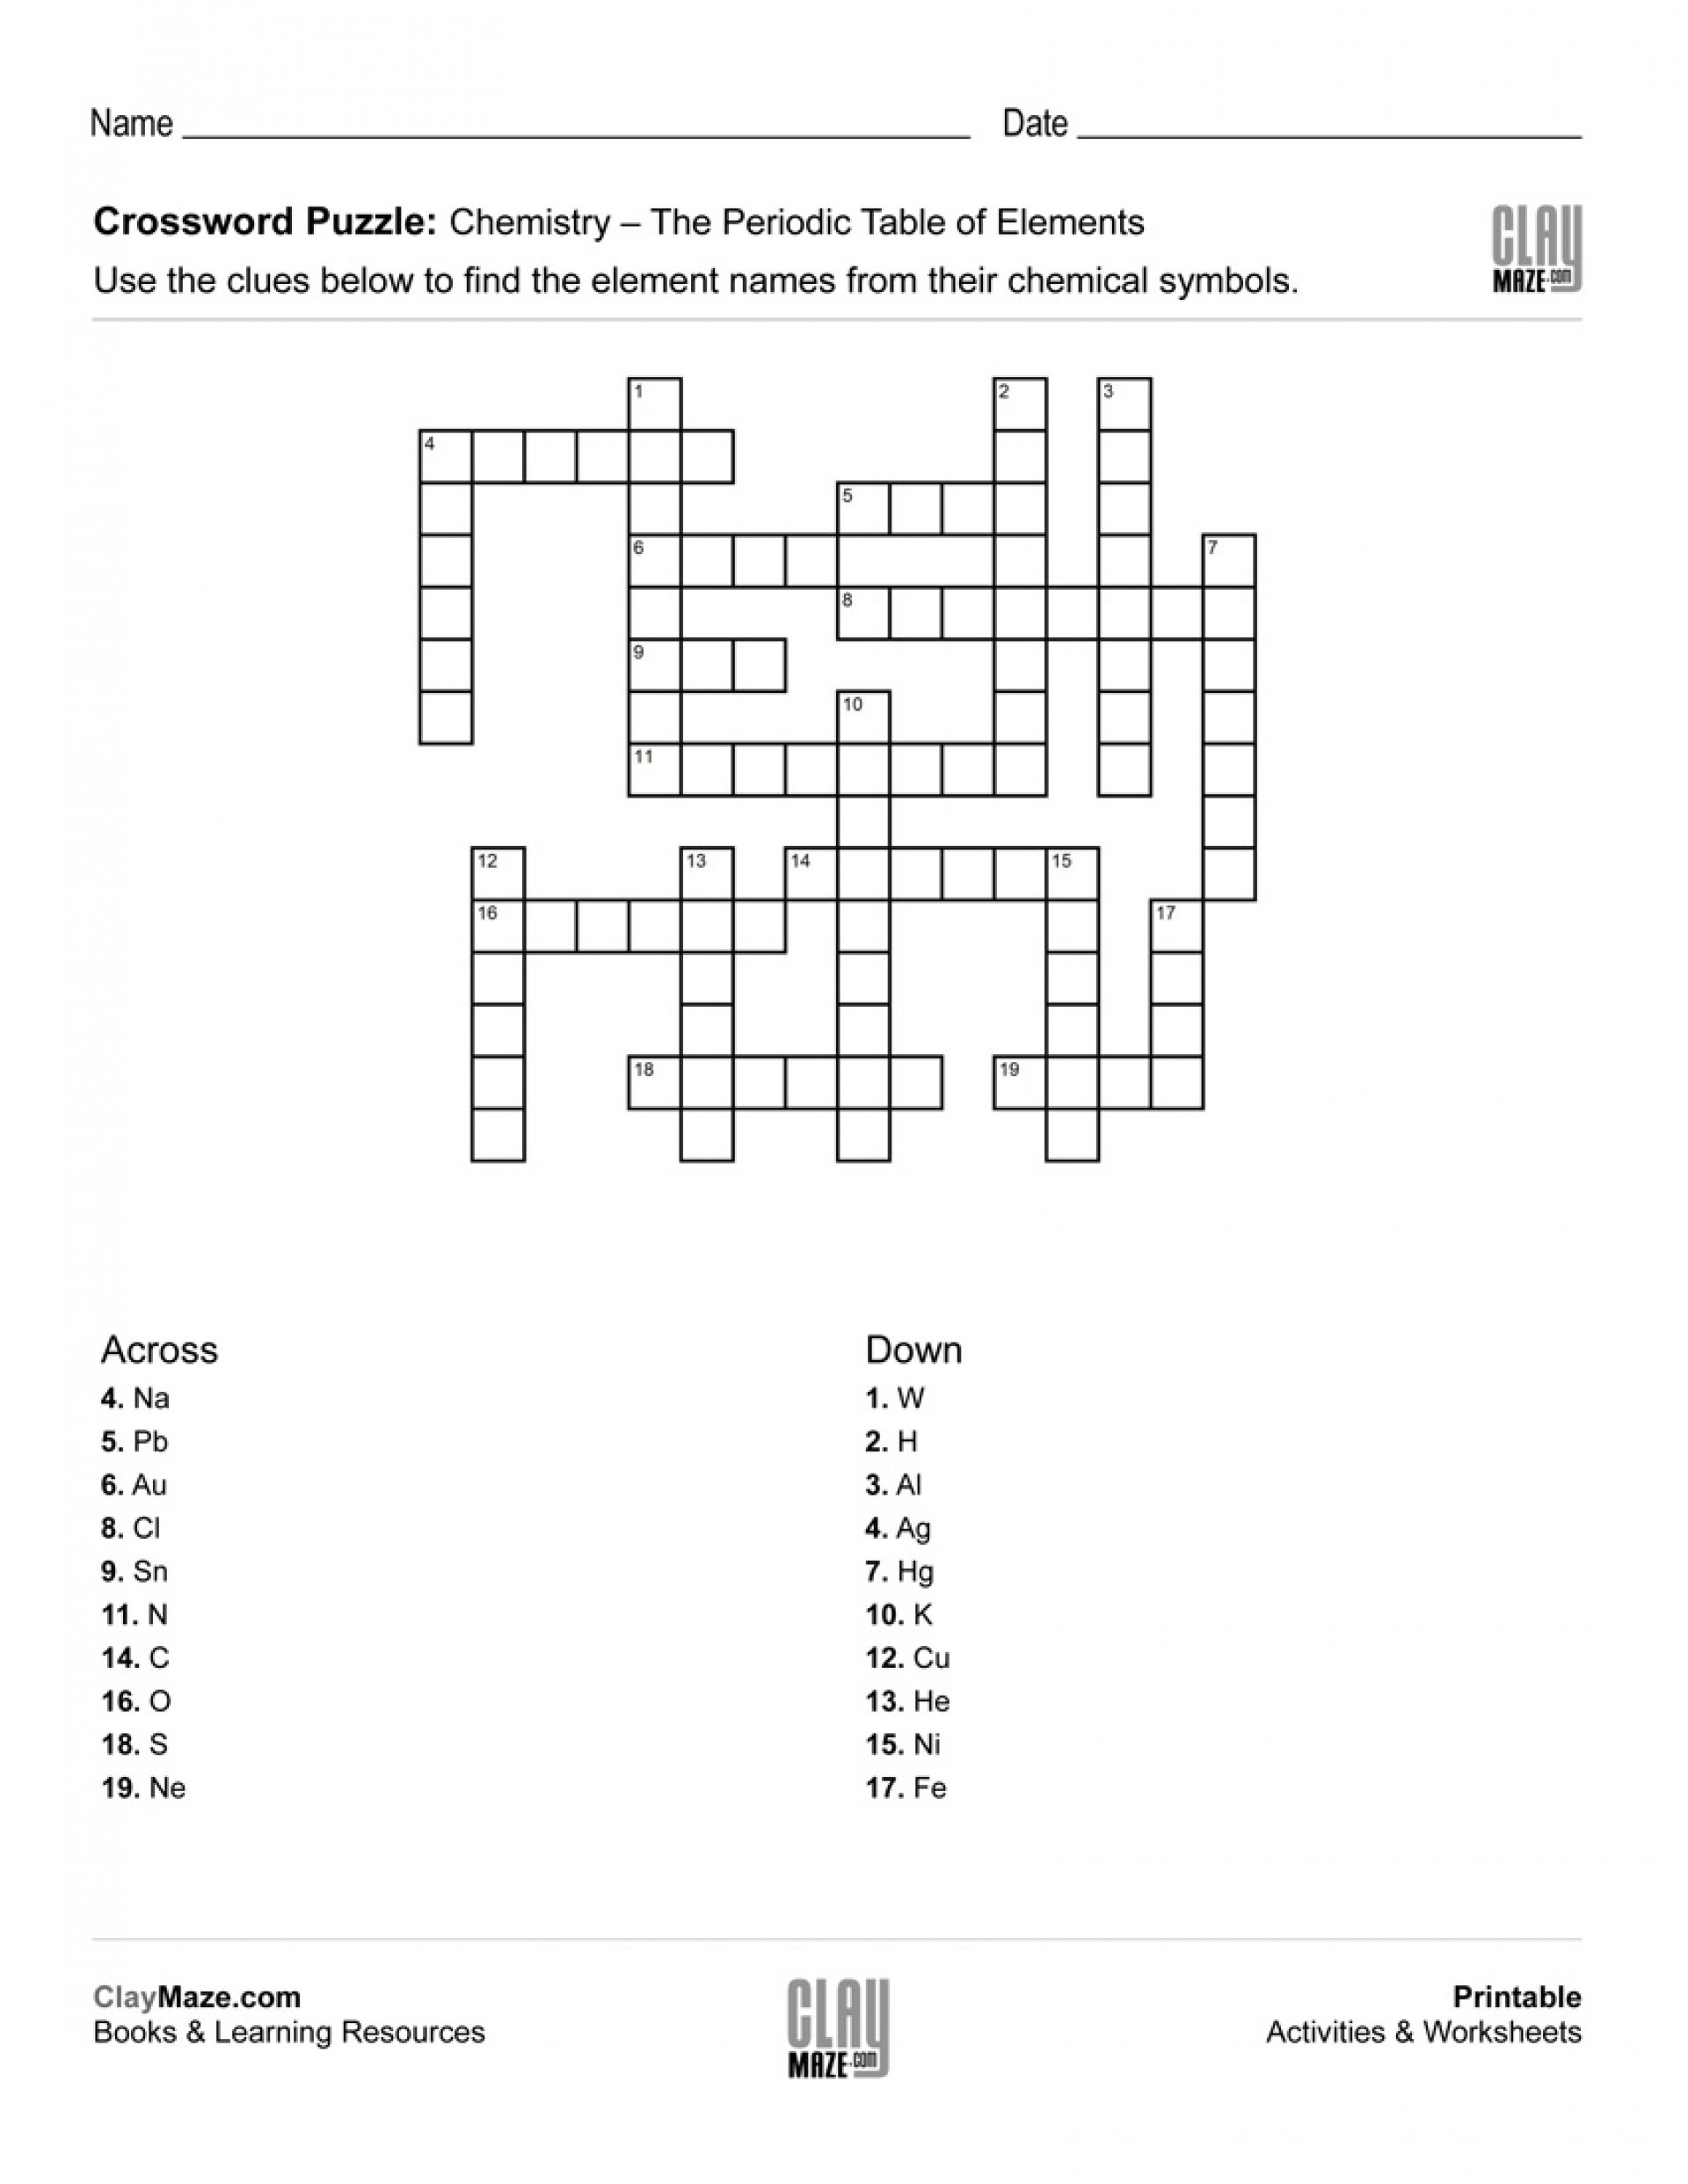 Periodic Table Crossword Puzzle Pdf New Chemistry Periodic Table - Printable Crossword Puzzle Pdf